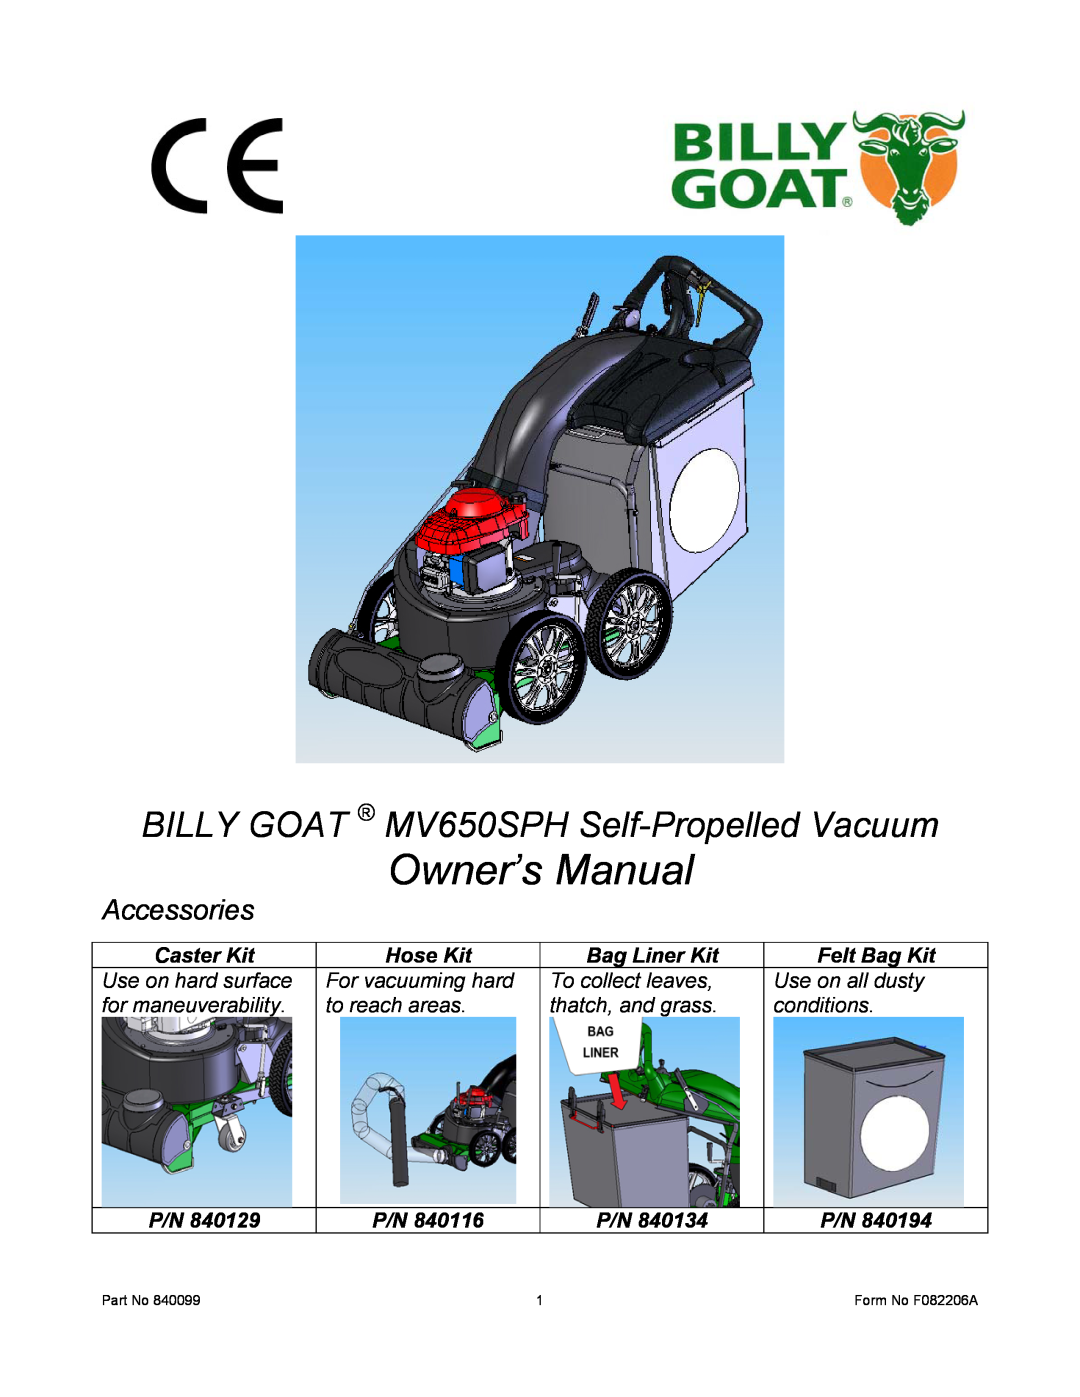 Billy Goat owner manual Owner’s Manual, BILLY GOAT MV650SPH Self-Propelled Vacuum, Accessories, Caster Kit, Hose Kit 